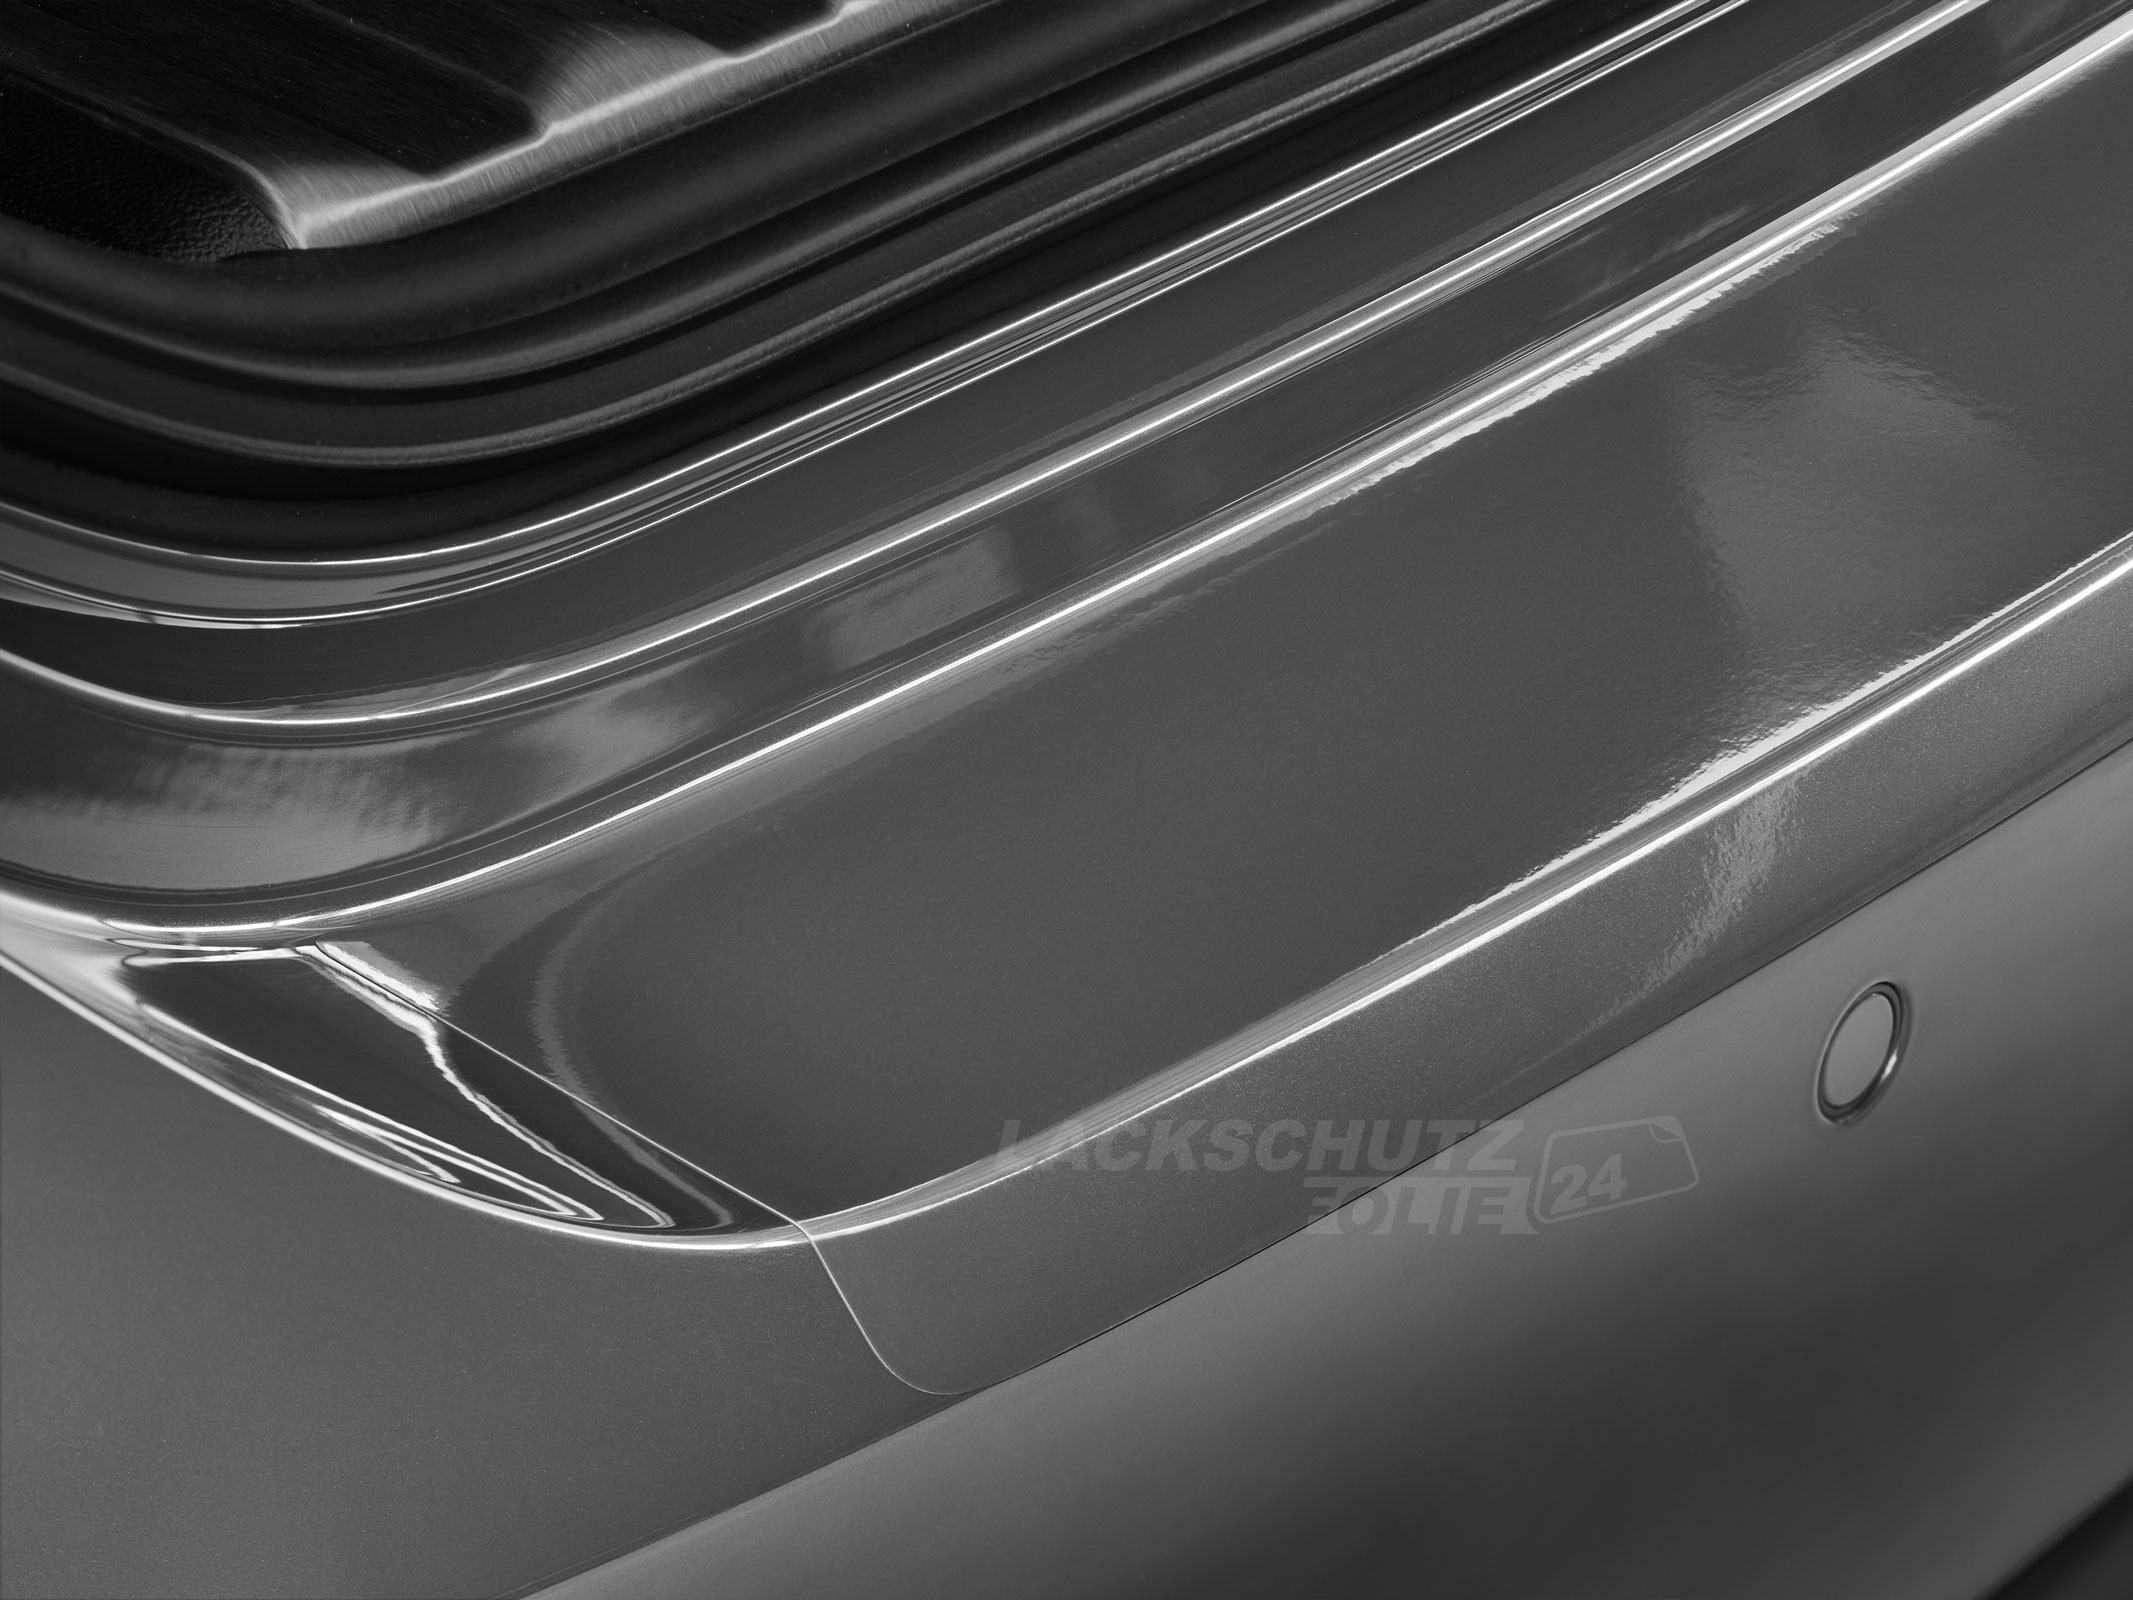 Ladekantenschutzfolie - Transparent Glatt Hochglänzend 150 µm stark für Audi A3 Typ 8L, BJ 1996-2003